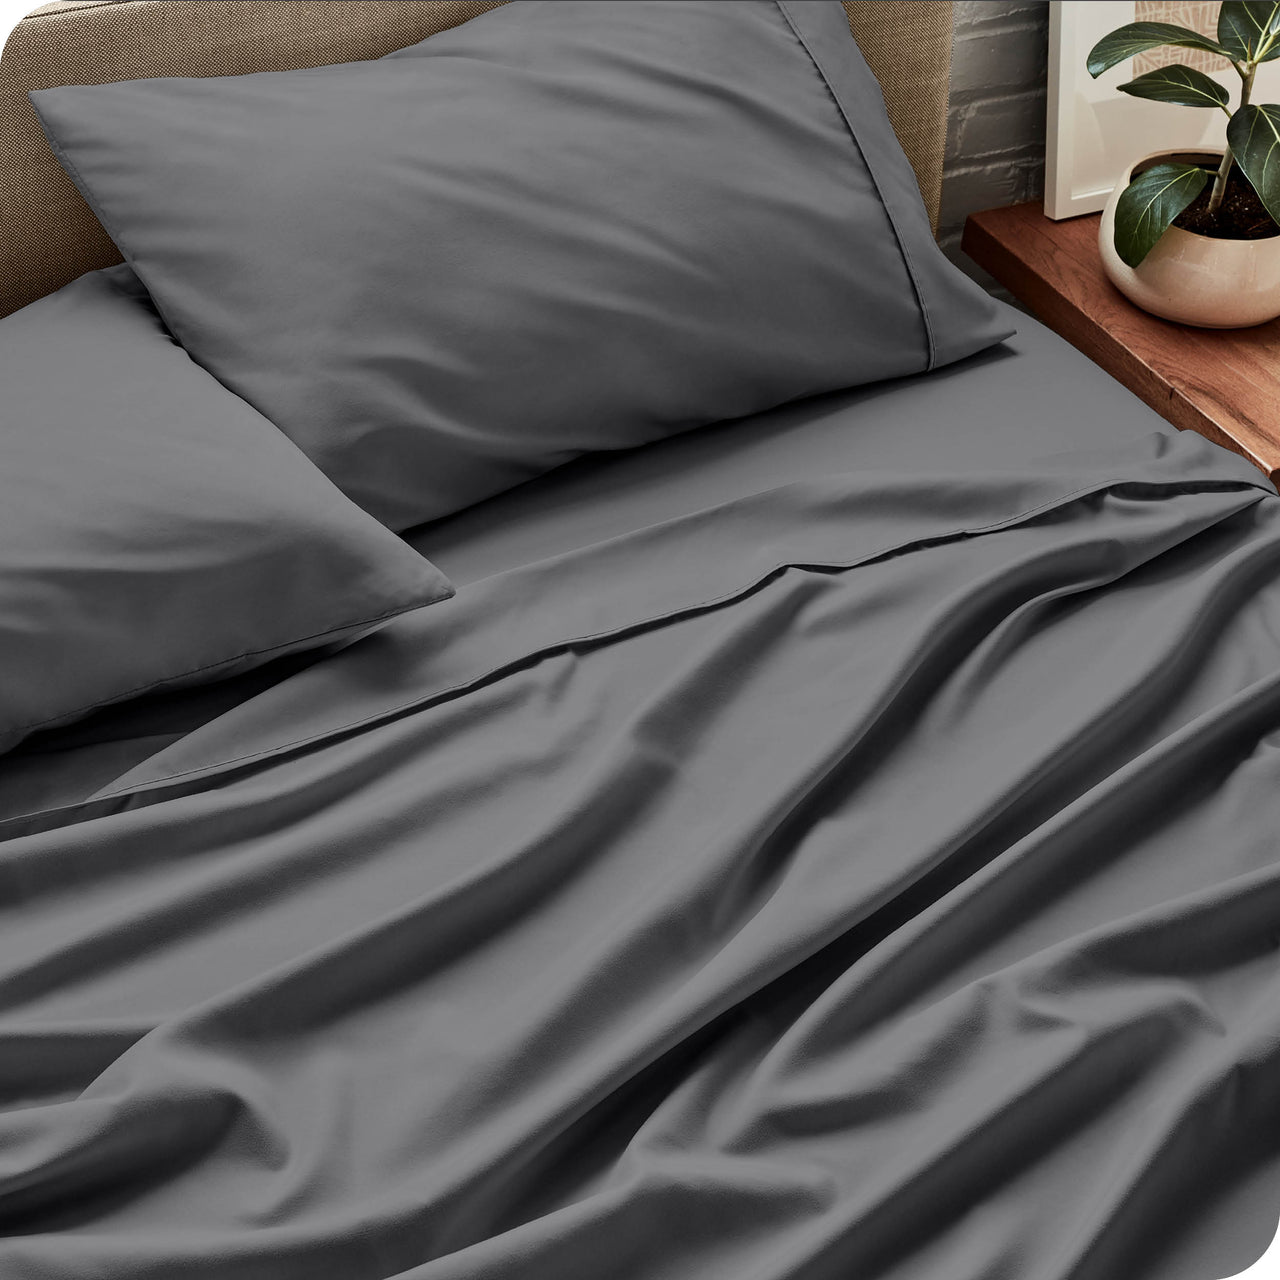 Extra Deep Pocket Queen Size Fitted Bed Sheet Set Lightweight Grey